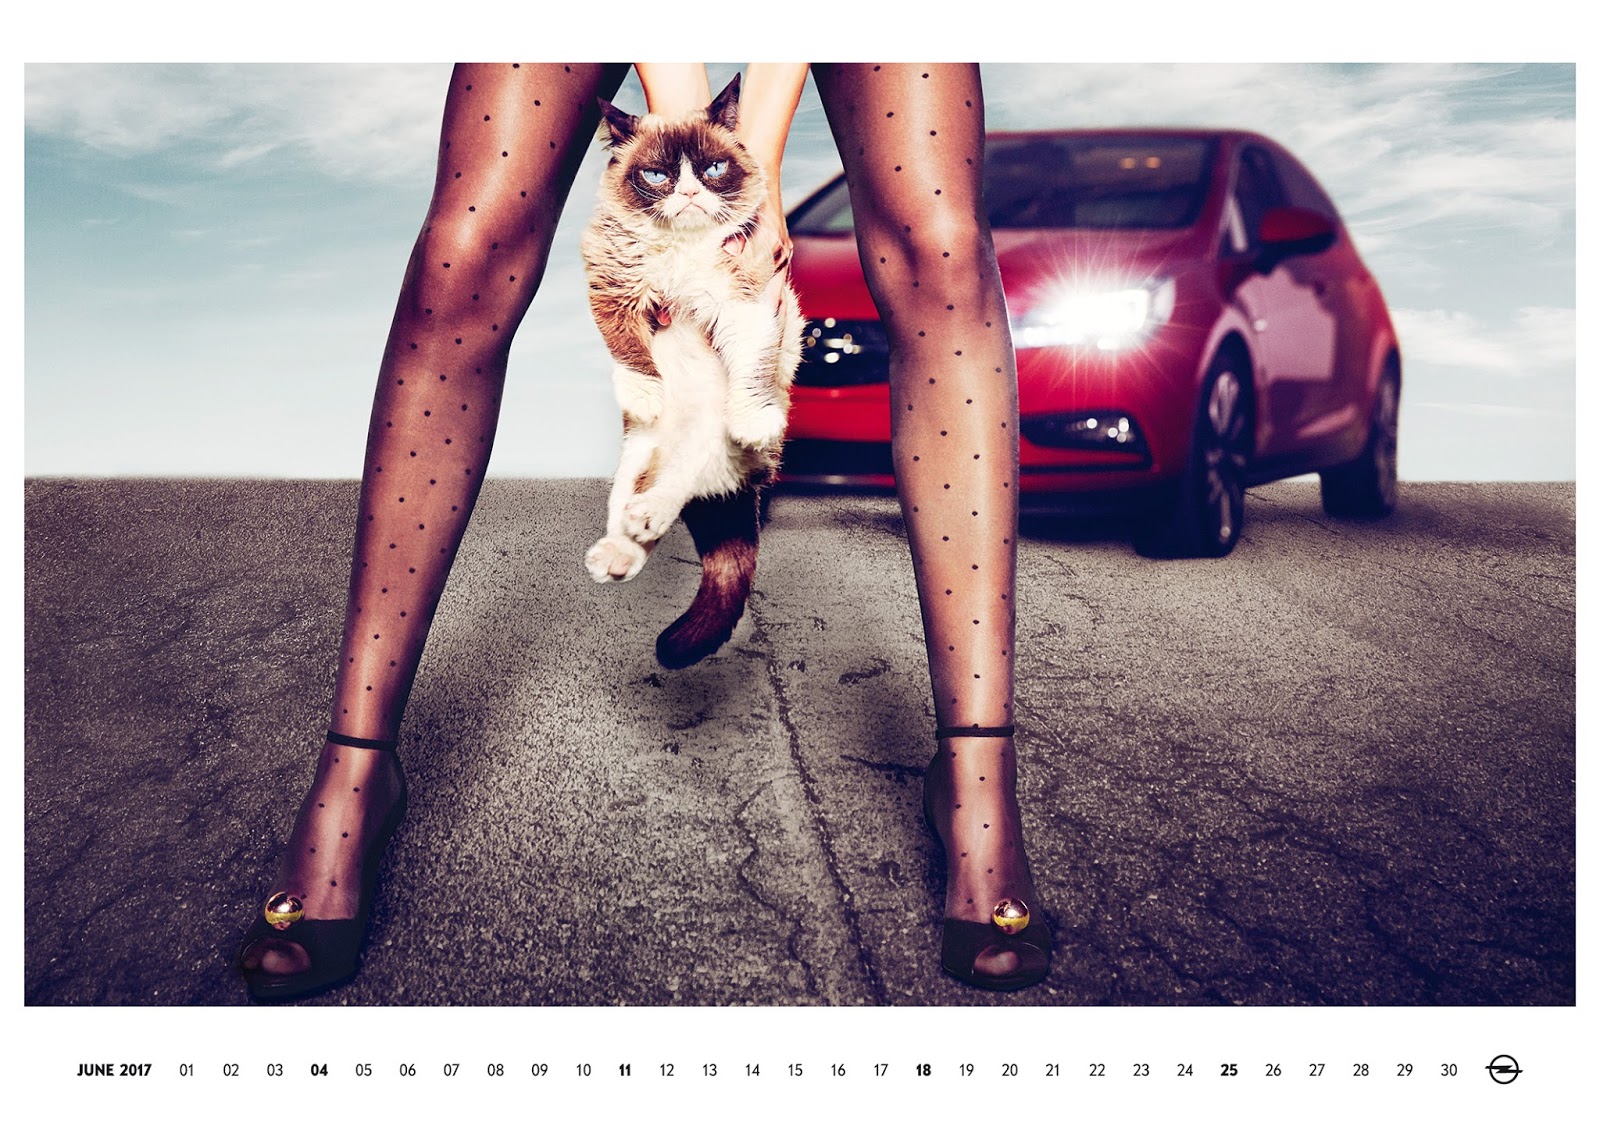 Opel Calendar 303854 Η κόρη του Μικ Τζάγκερ, η grumpy cat και το ημερολόγιο της Opel